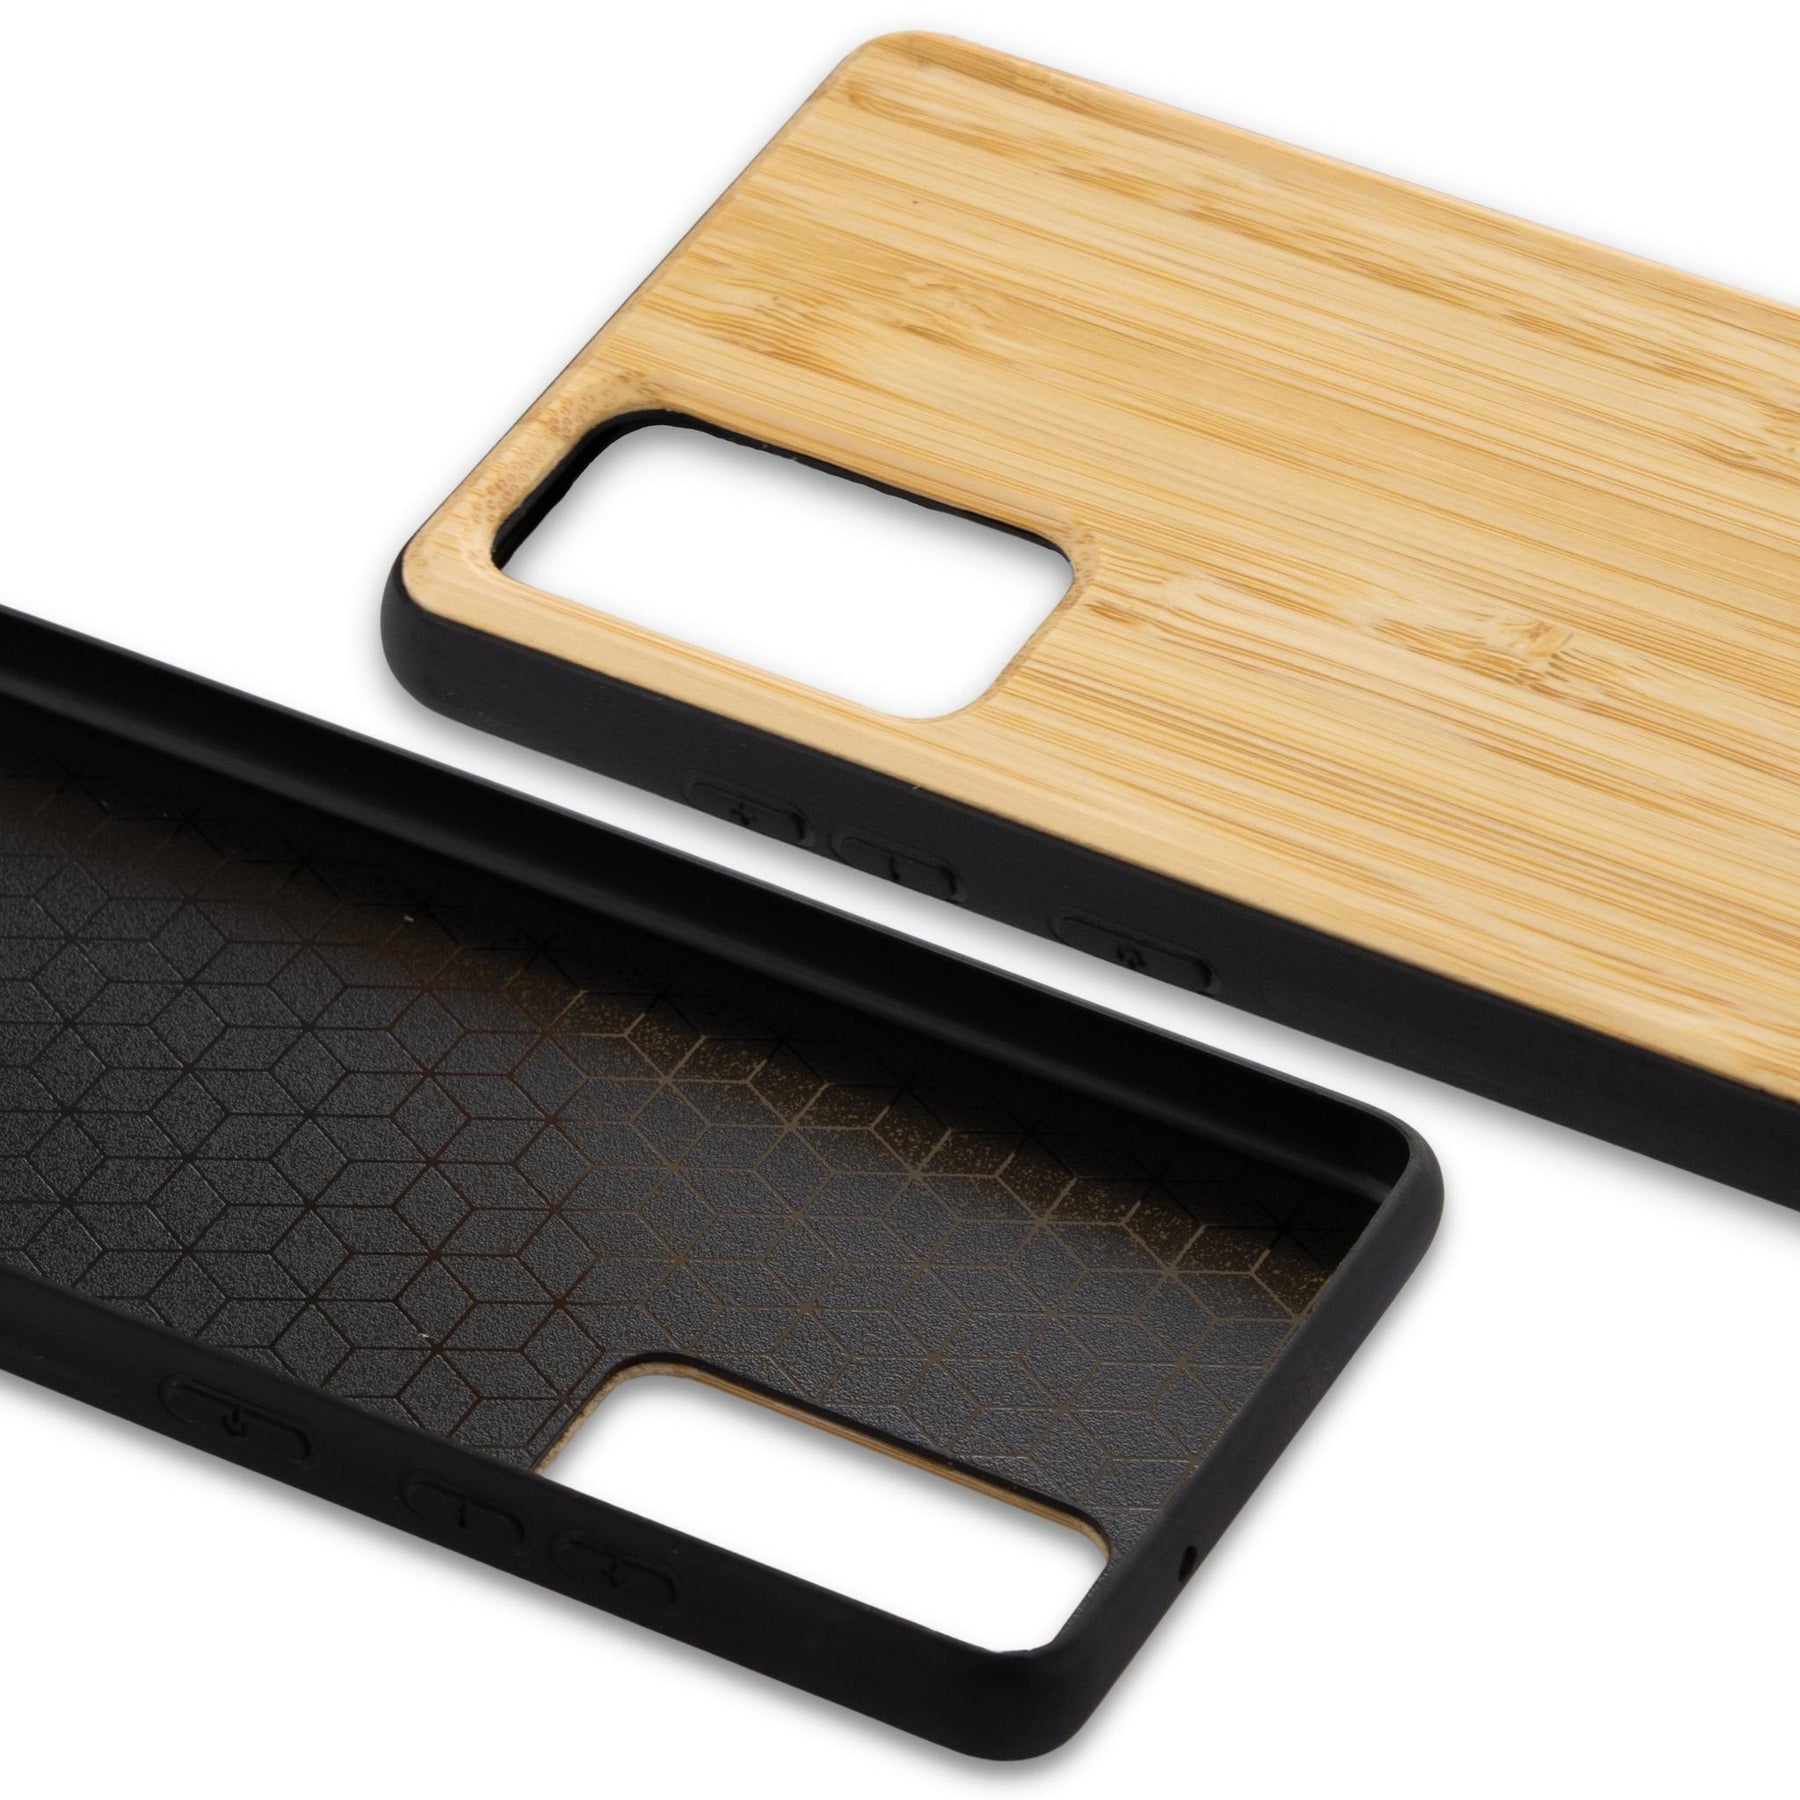 Samsung G S20FE Wooden Case + Screen Protector